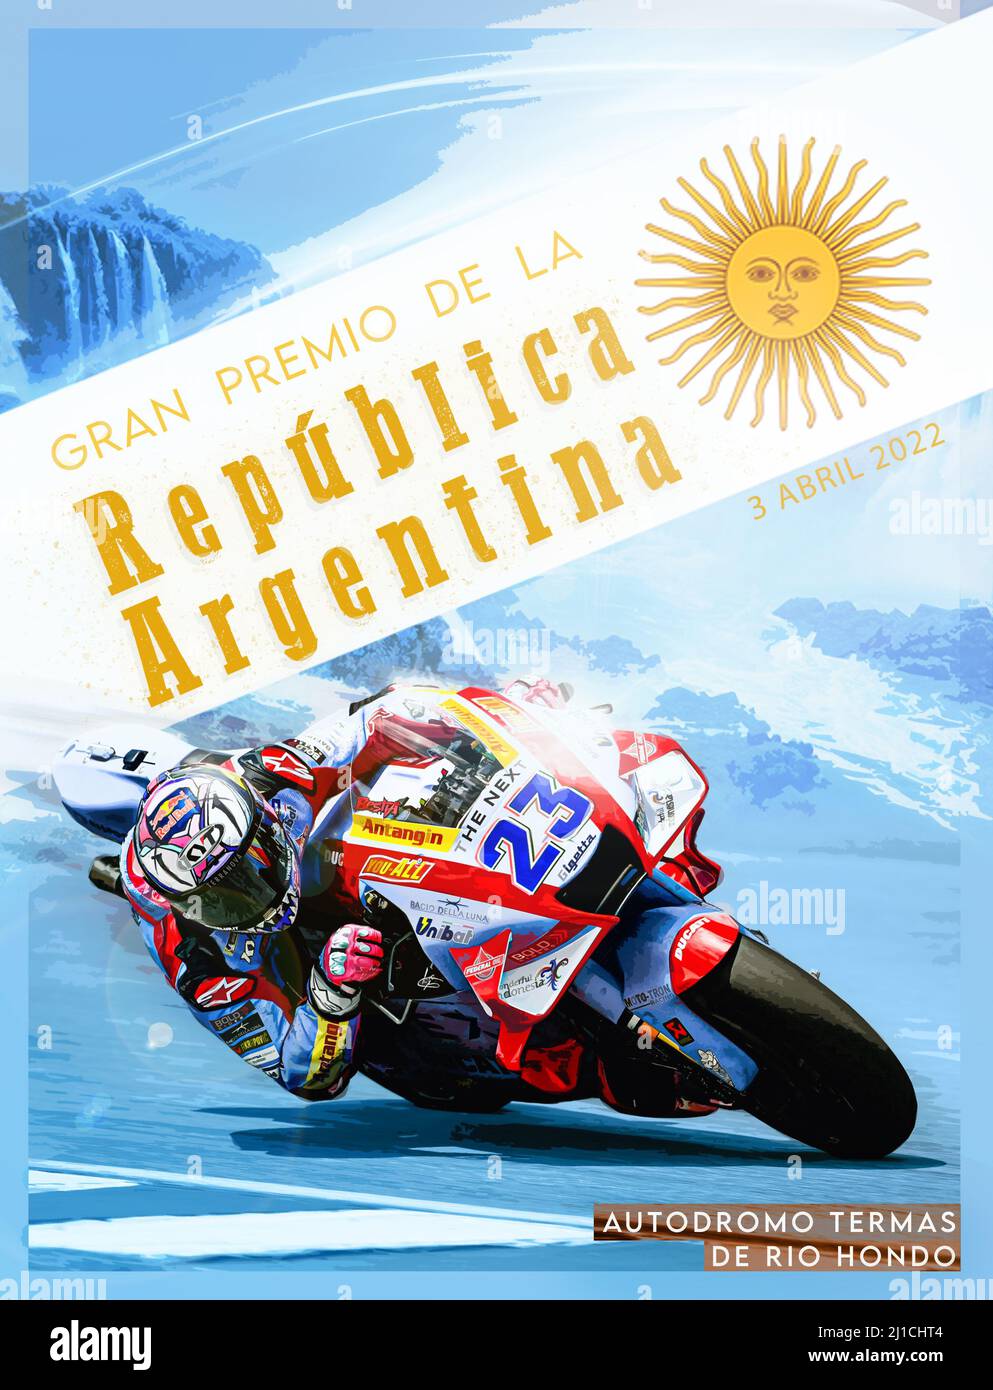 Argentina Moto GP Race Poster Stock Photo - Alamy